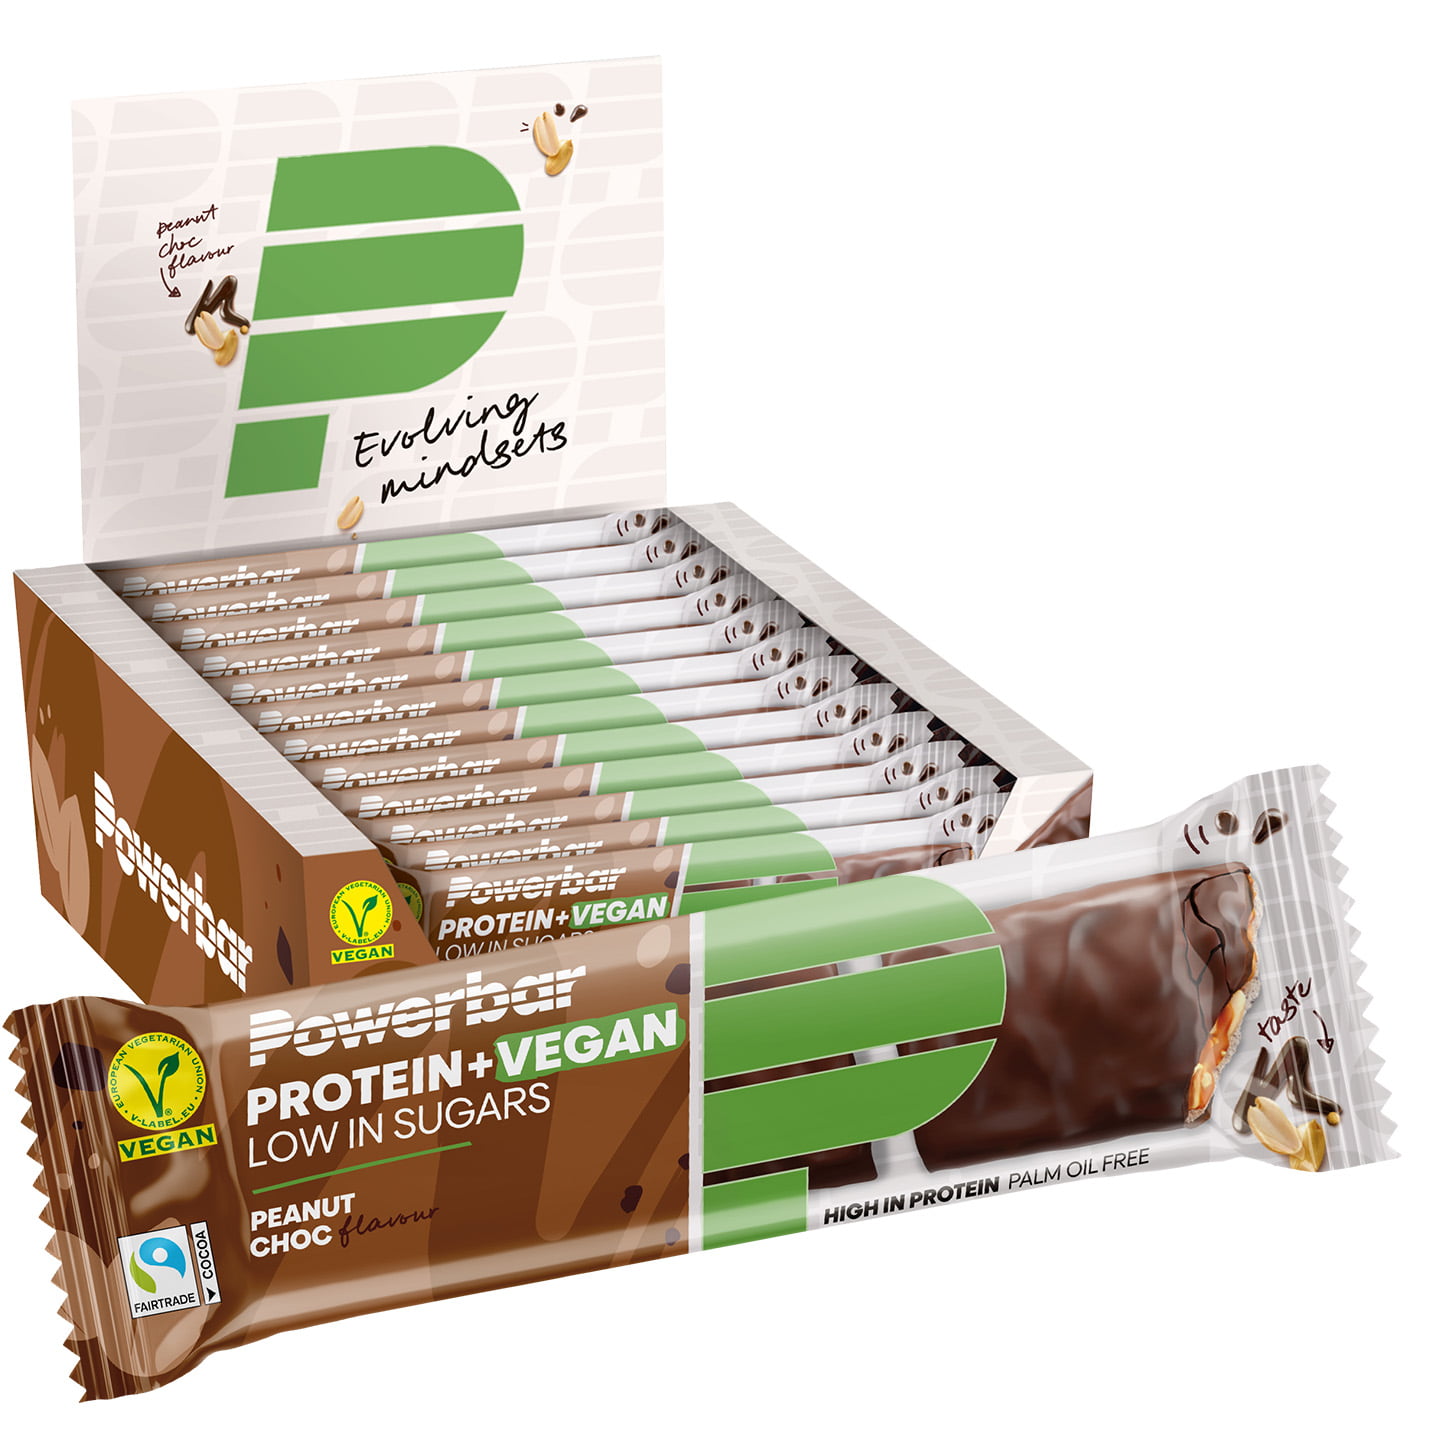 POWERBAR Protein+ vegan Low in Sugars Peanut Chocolate 12 St., Sports food